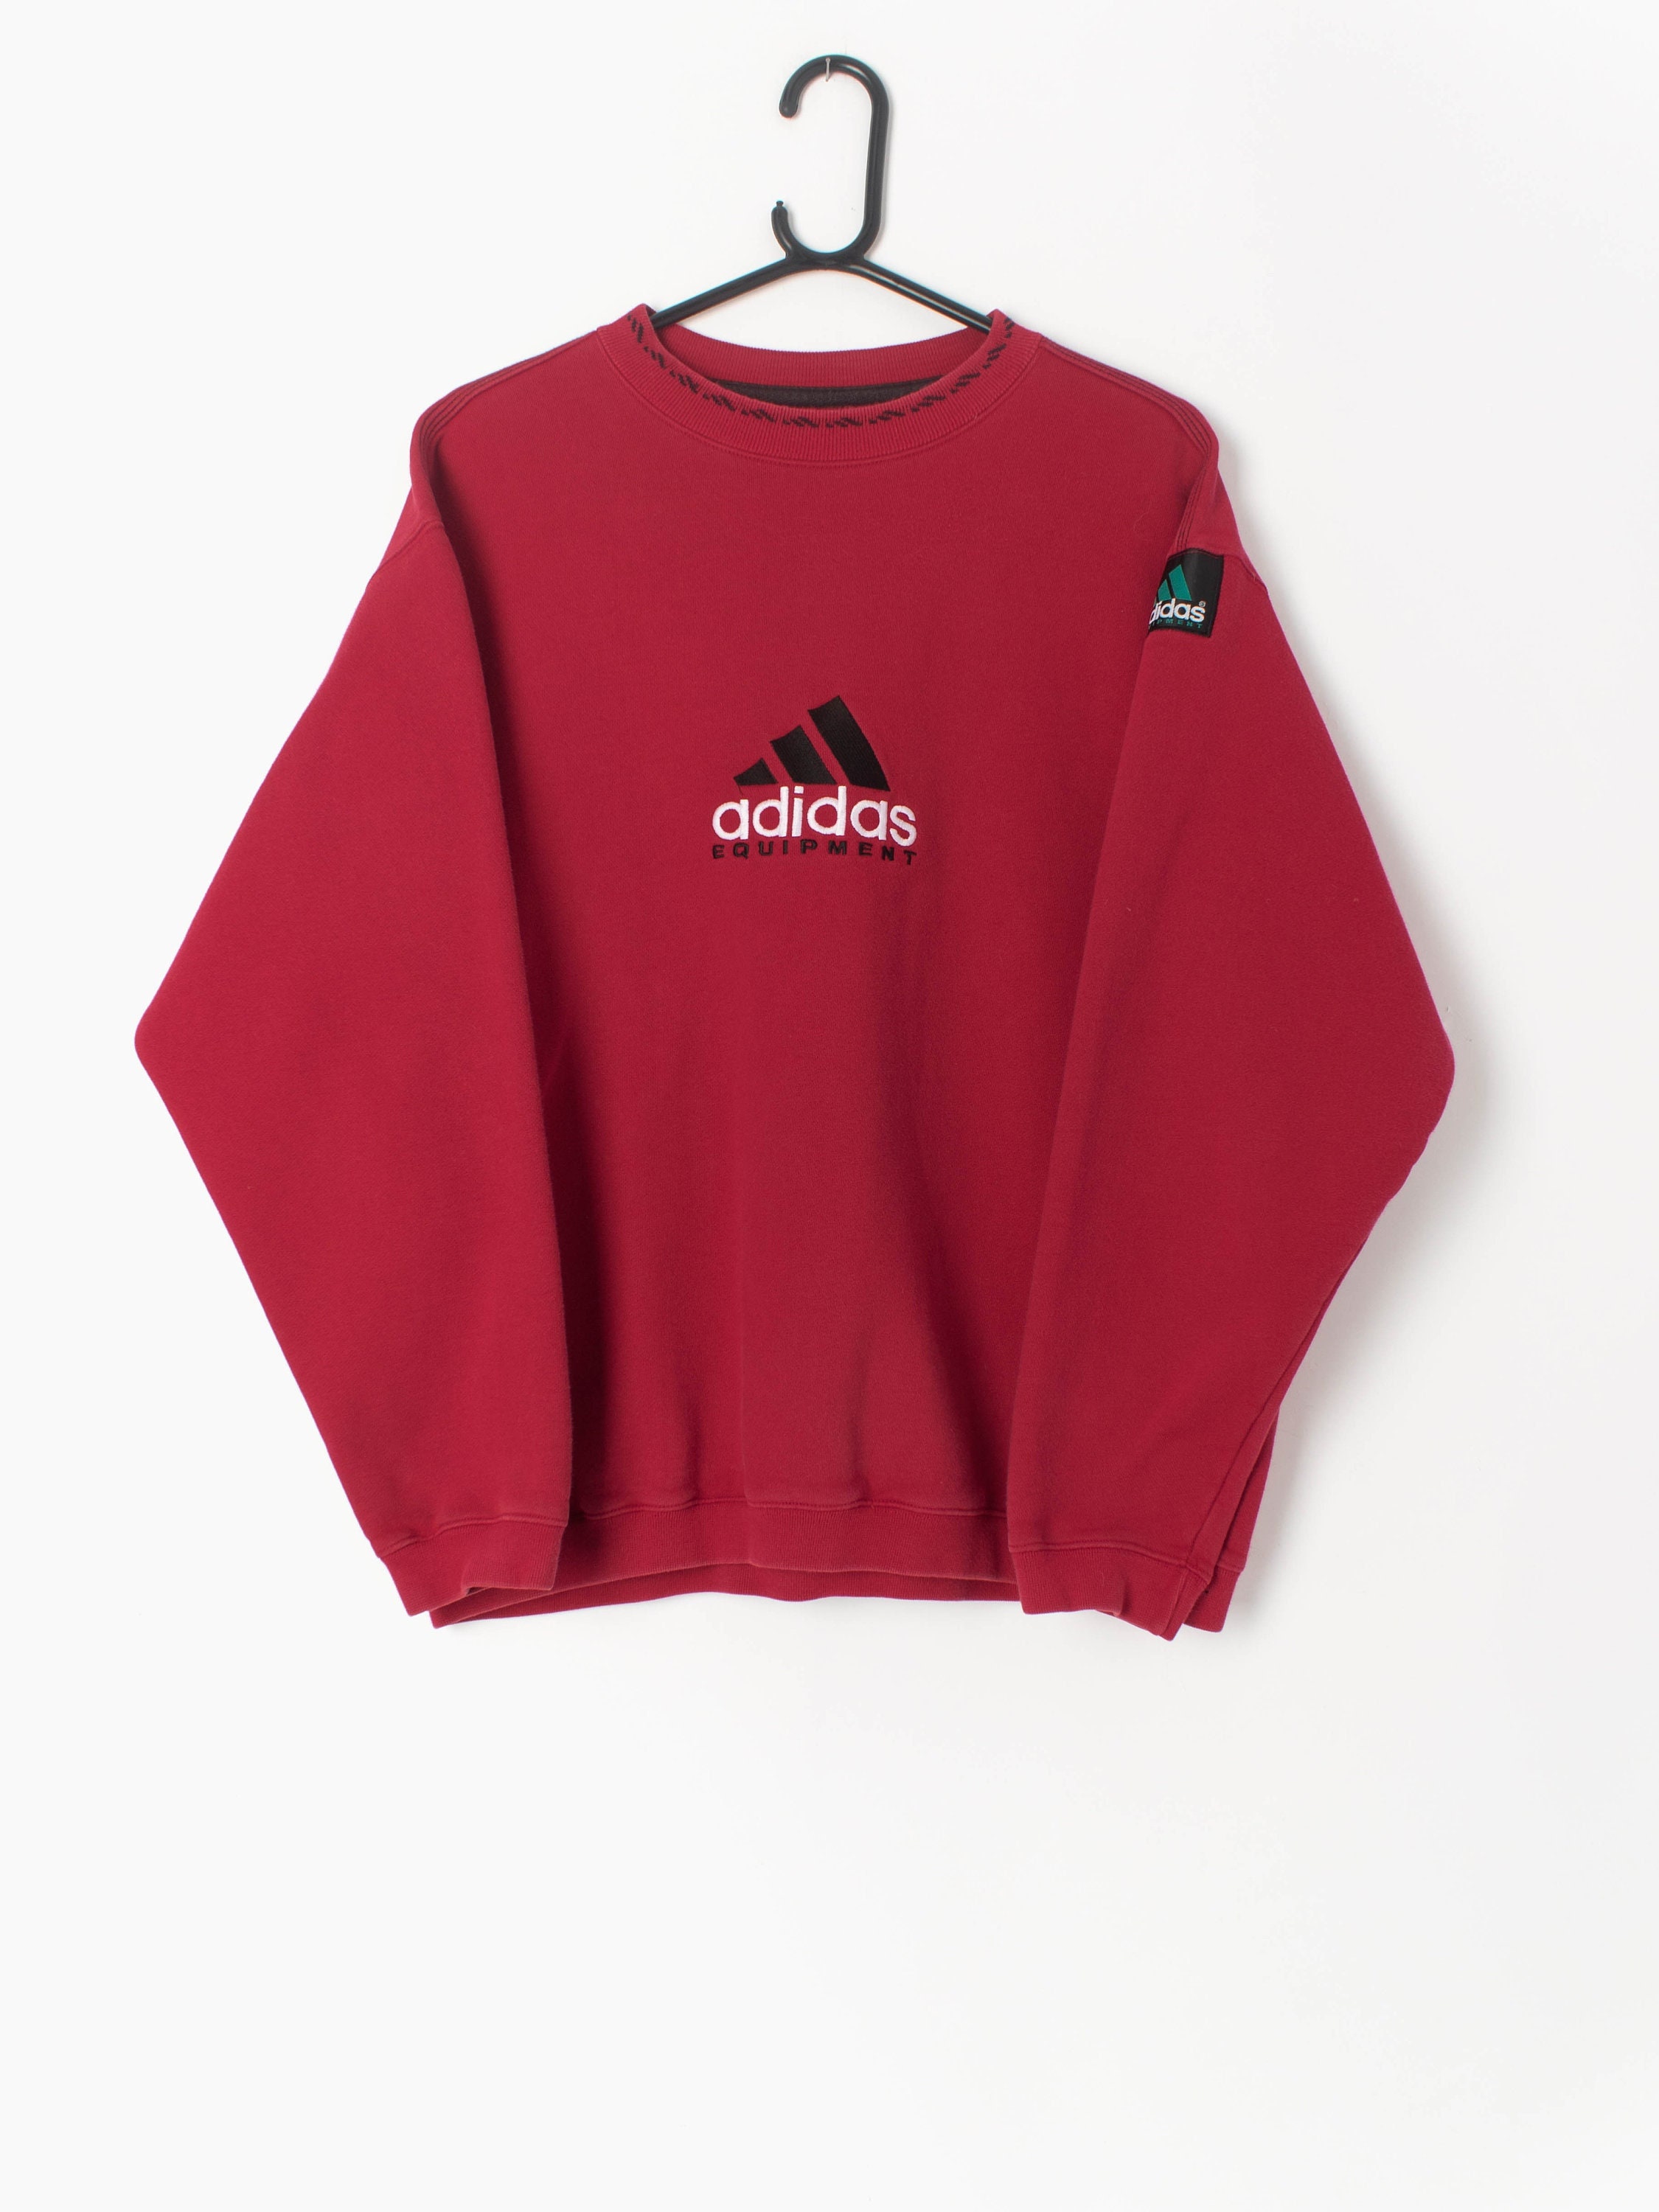 eigendom hanger Offer Buy Vintage 90s Adidas Equipment Sweatshirt Spellout in Red Online in India  - Etsy